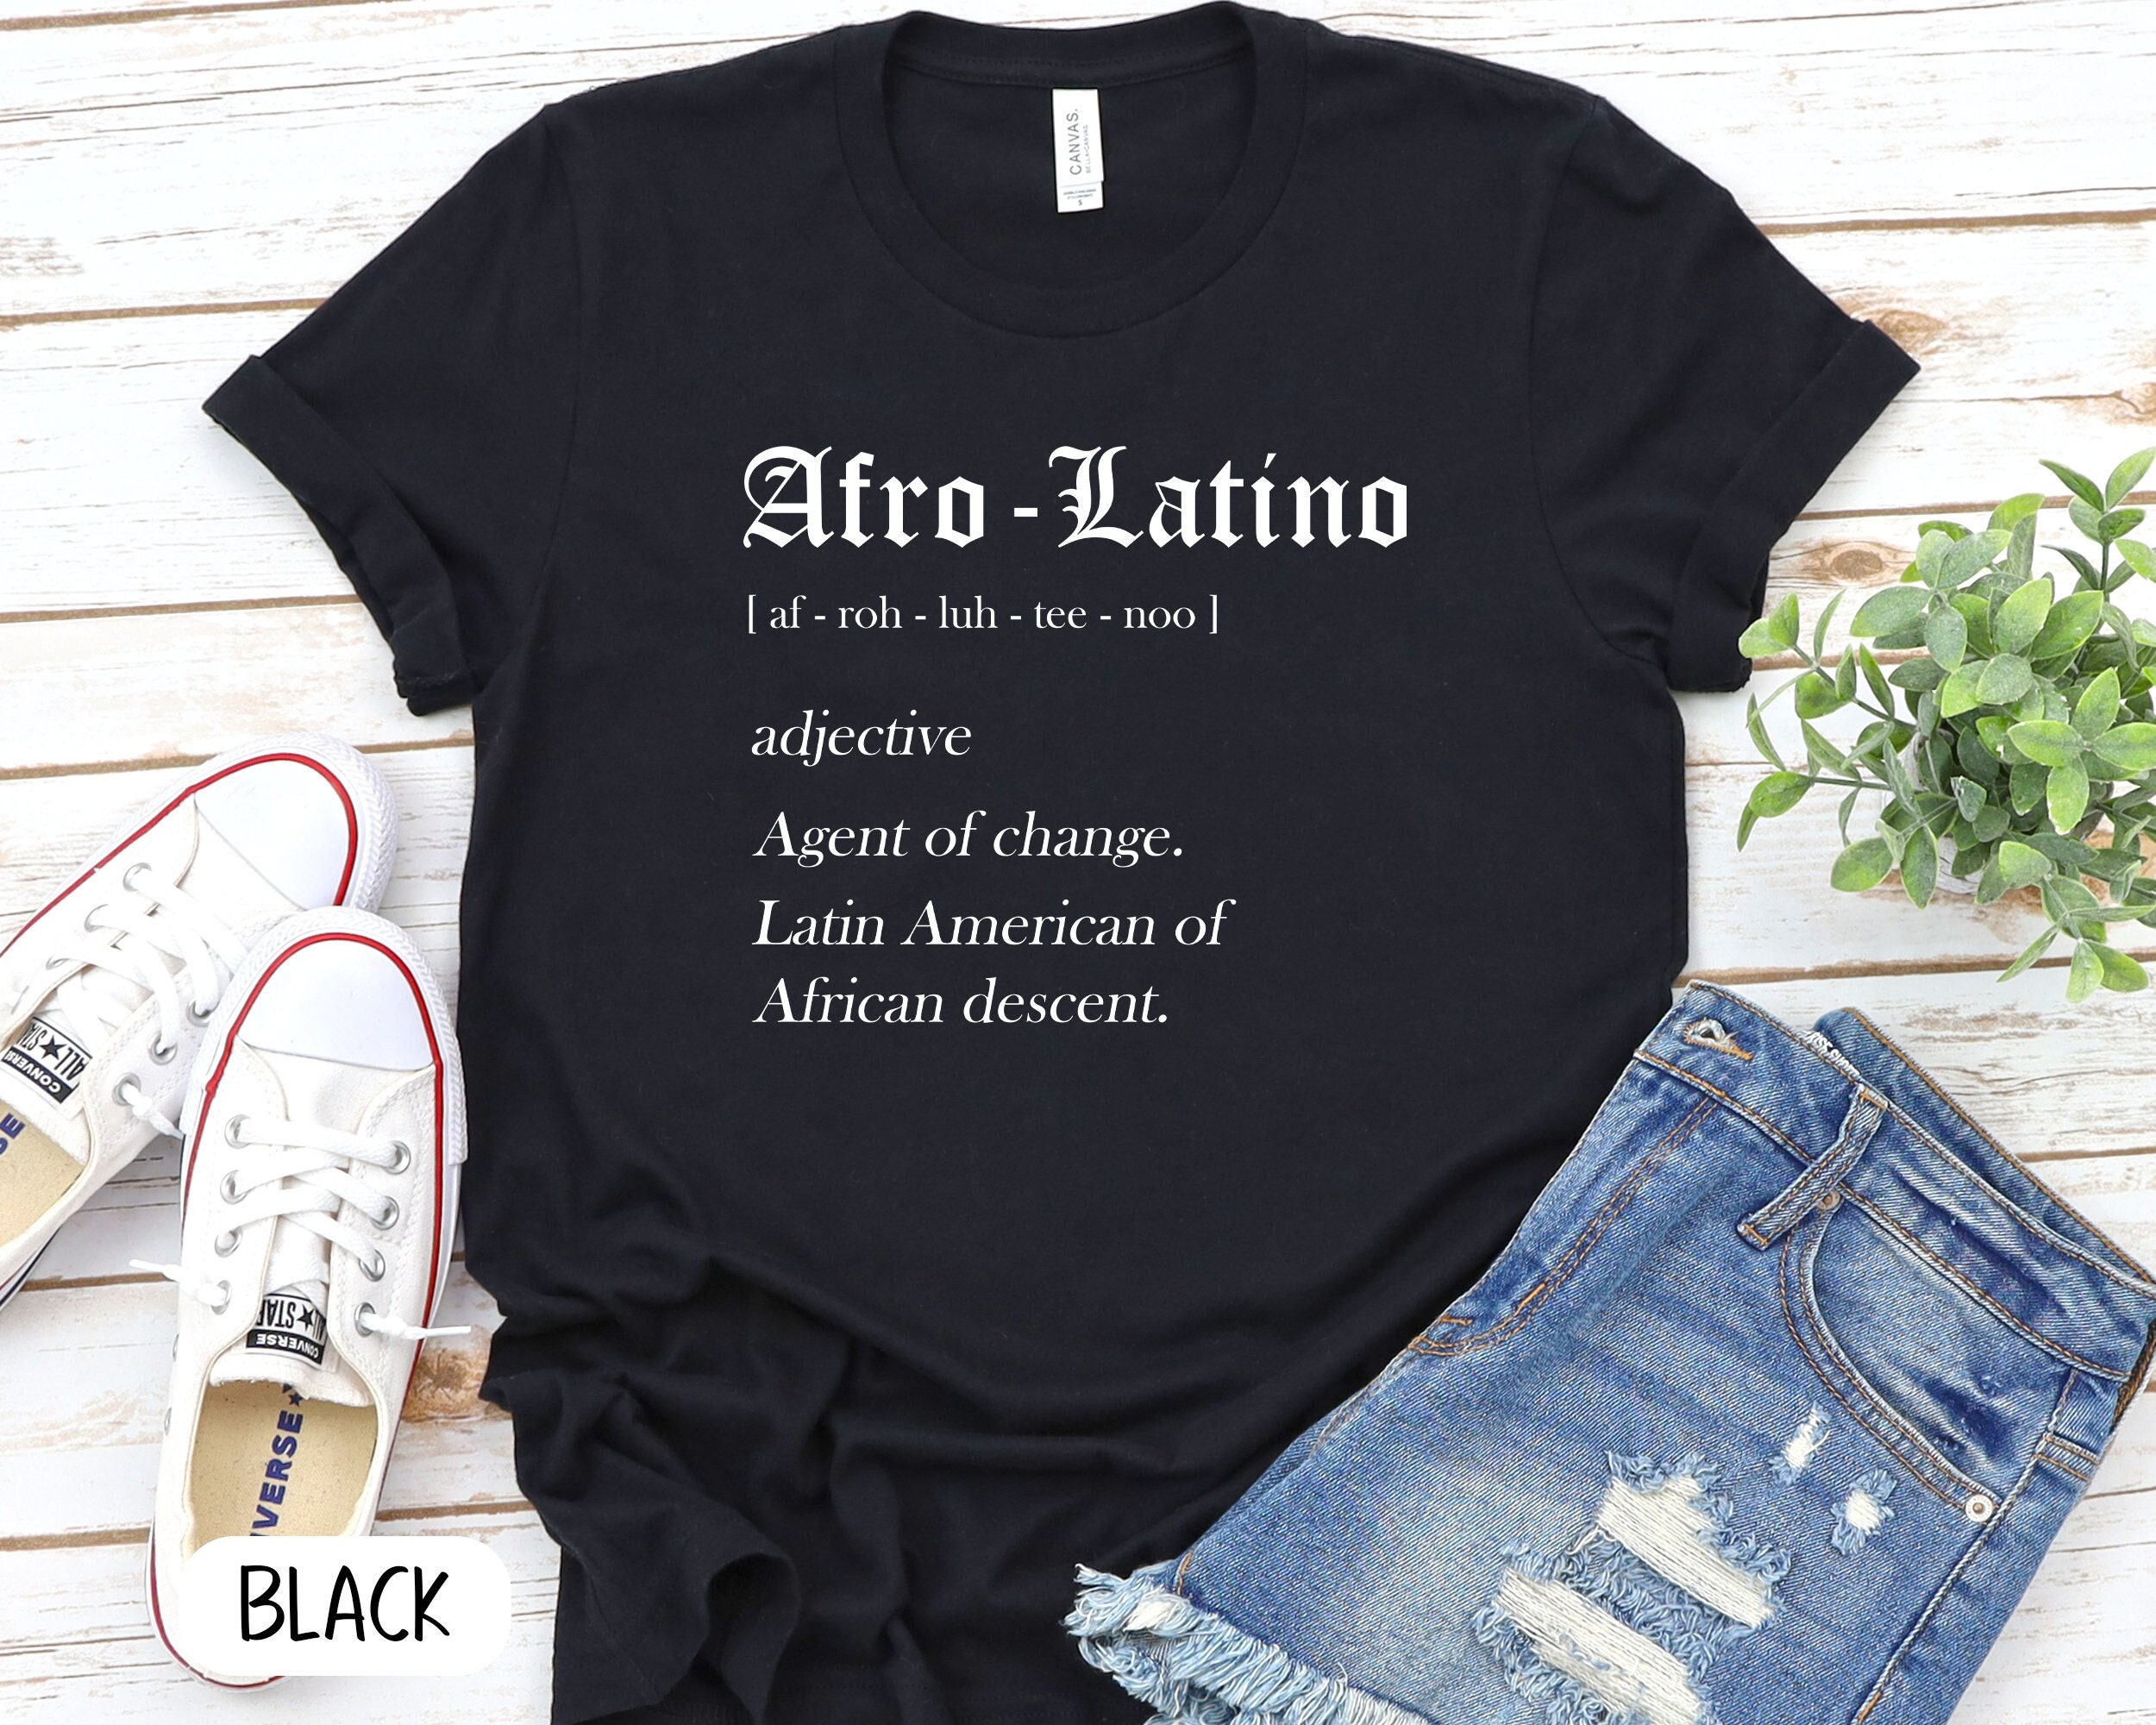 Latino Heat Shirt T Shirt 100% Cotton Latino Heat 2021 Latinoheat Short  Long Sleeve Tee Top - AliExpress